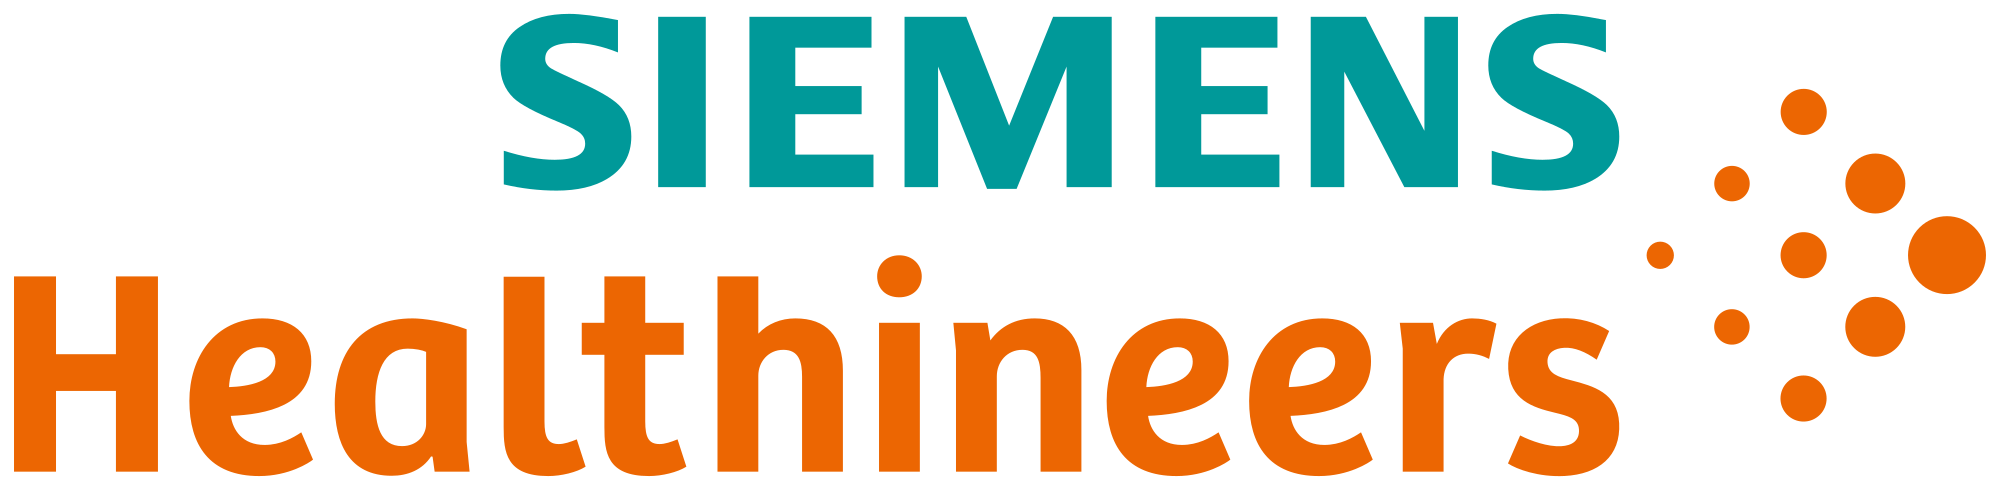 2000px Siemens Healthineers logo.transparent